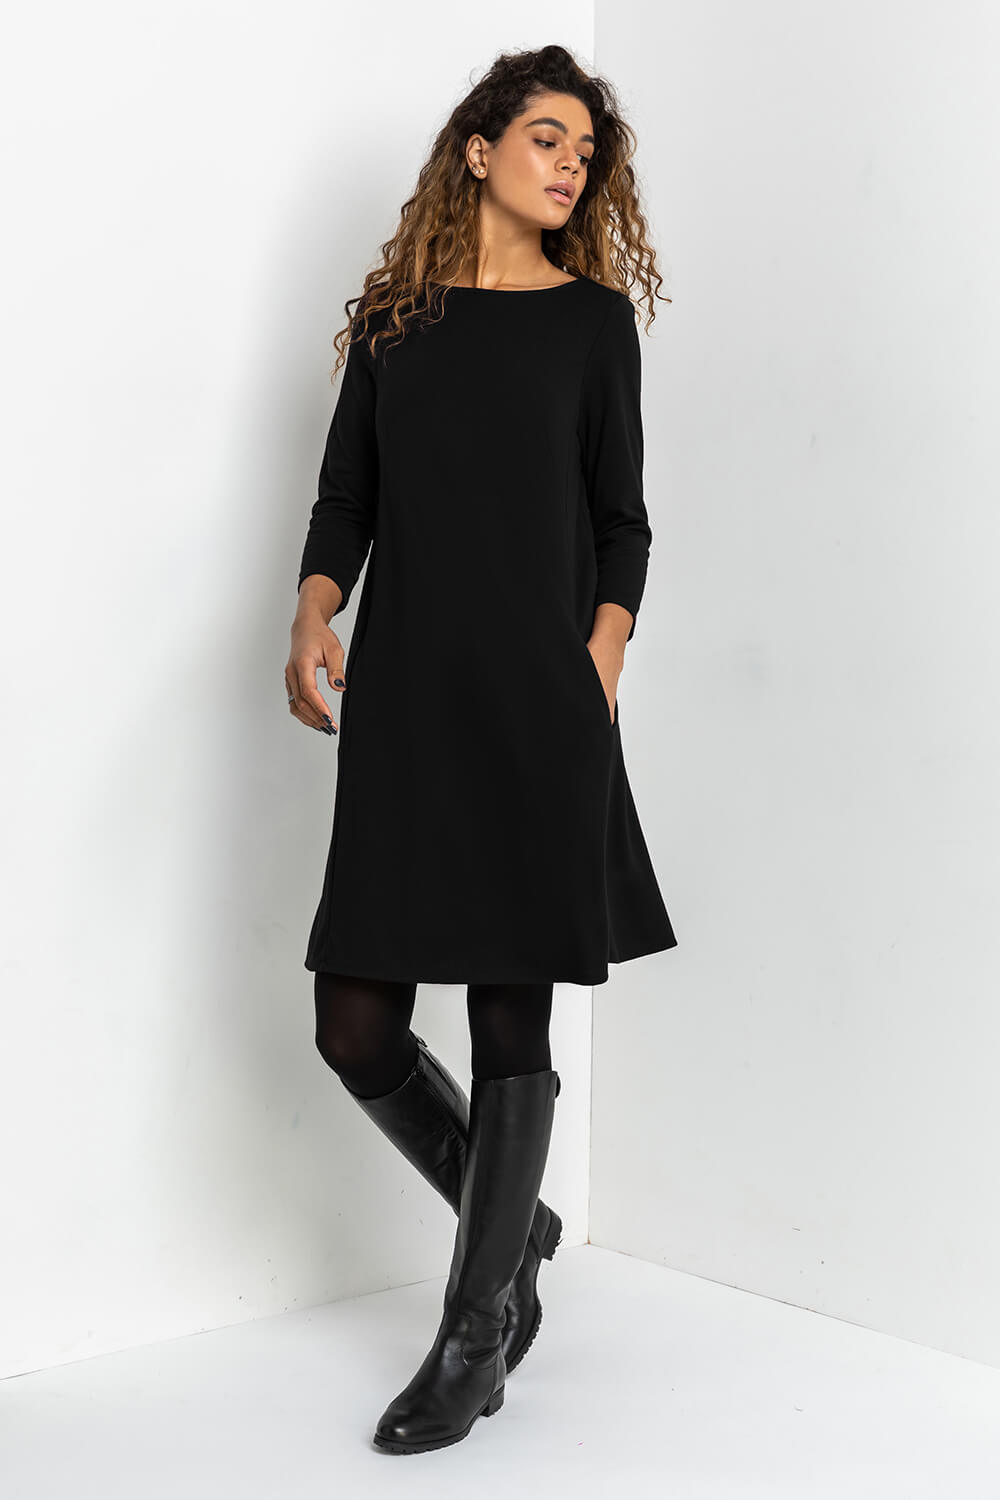 A-Line Pocket Detail Swing Dress in Black - Roman Originals UK